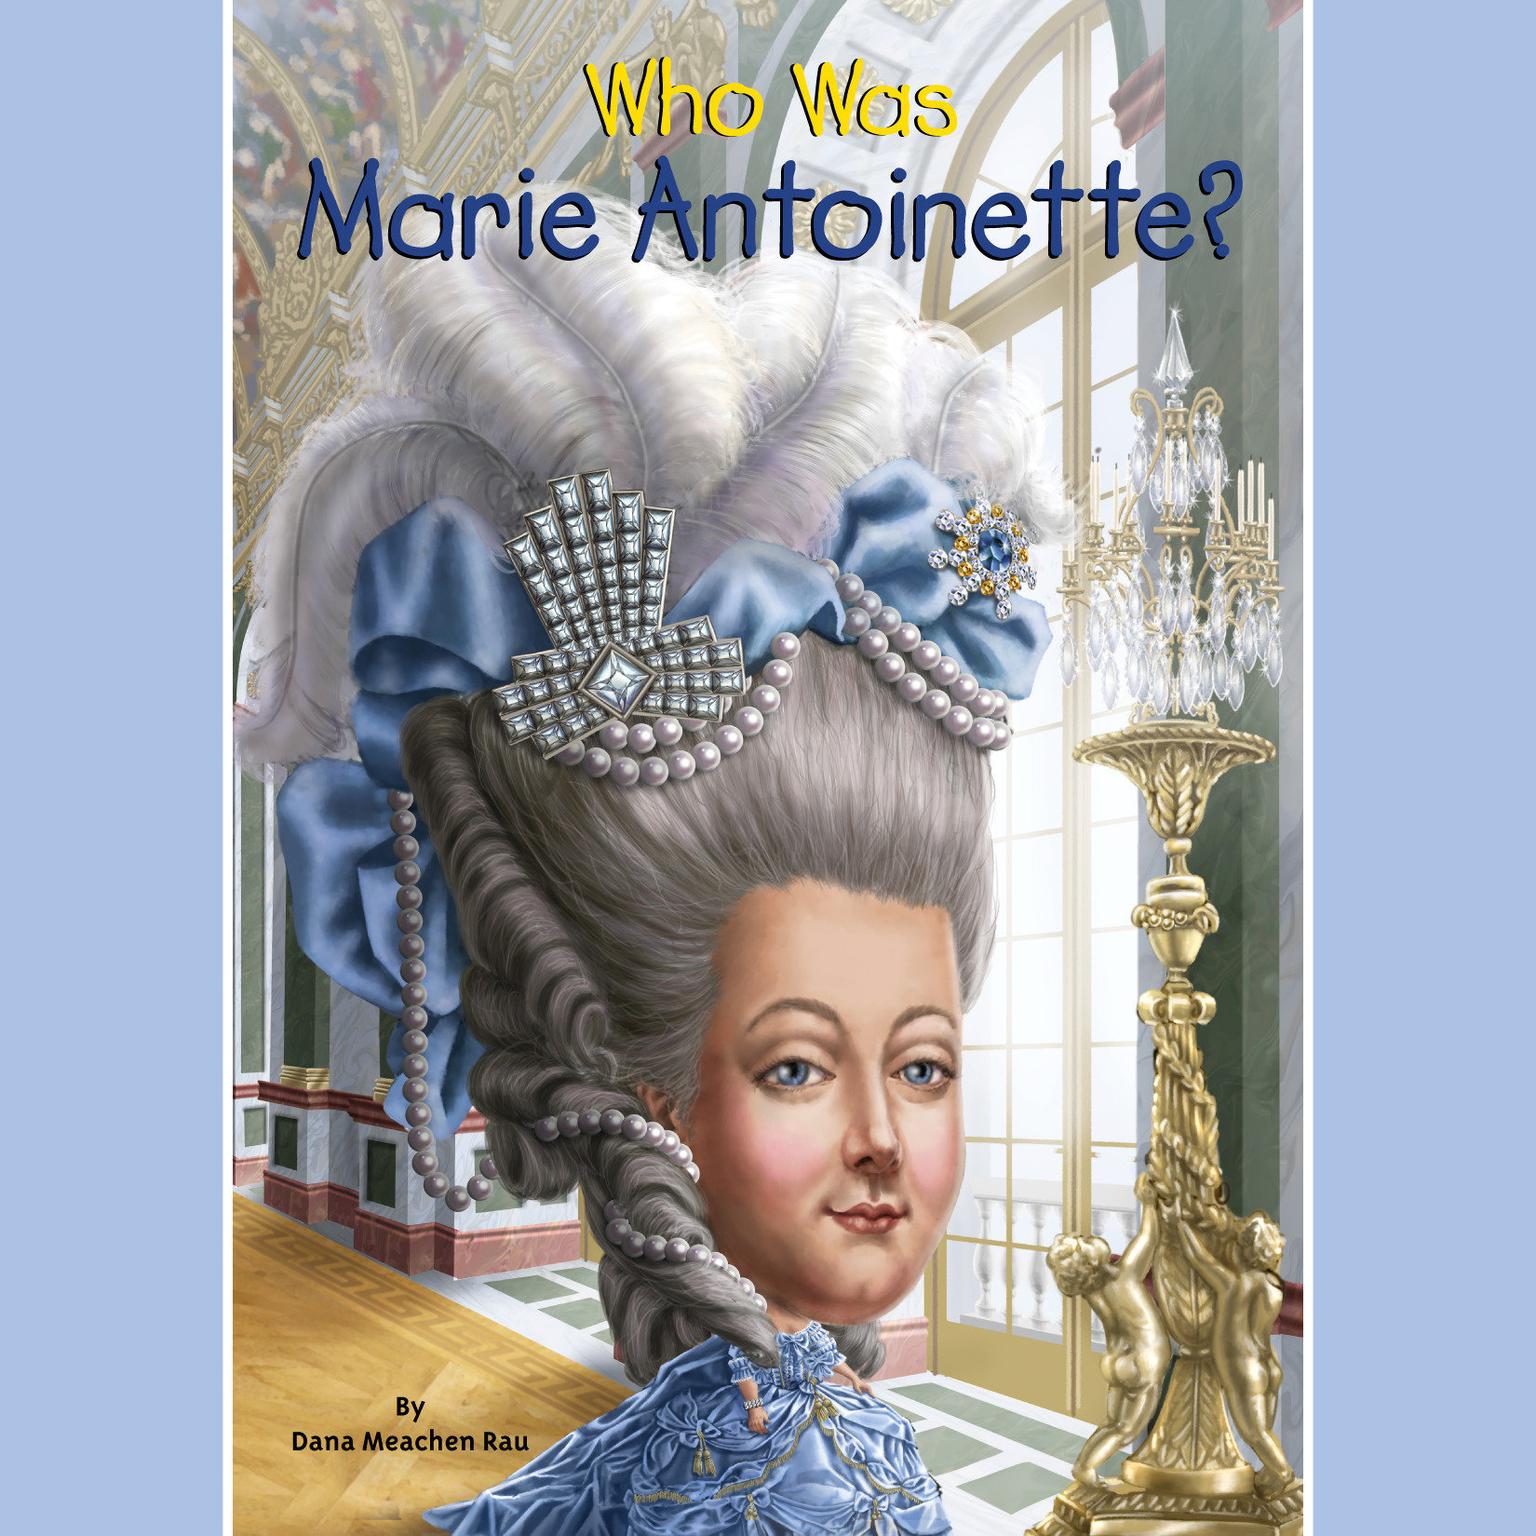 Who Was Marie Antoinette? Audiobook, by Dana Meachen Rau